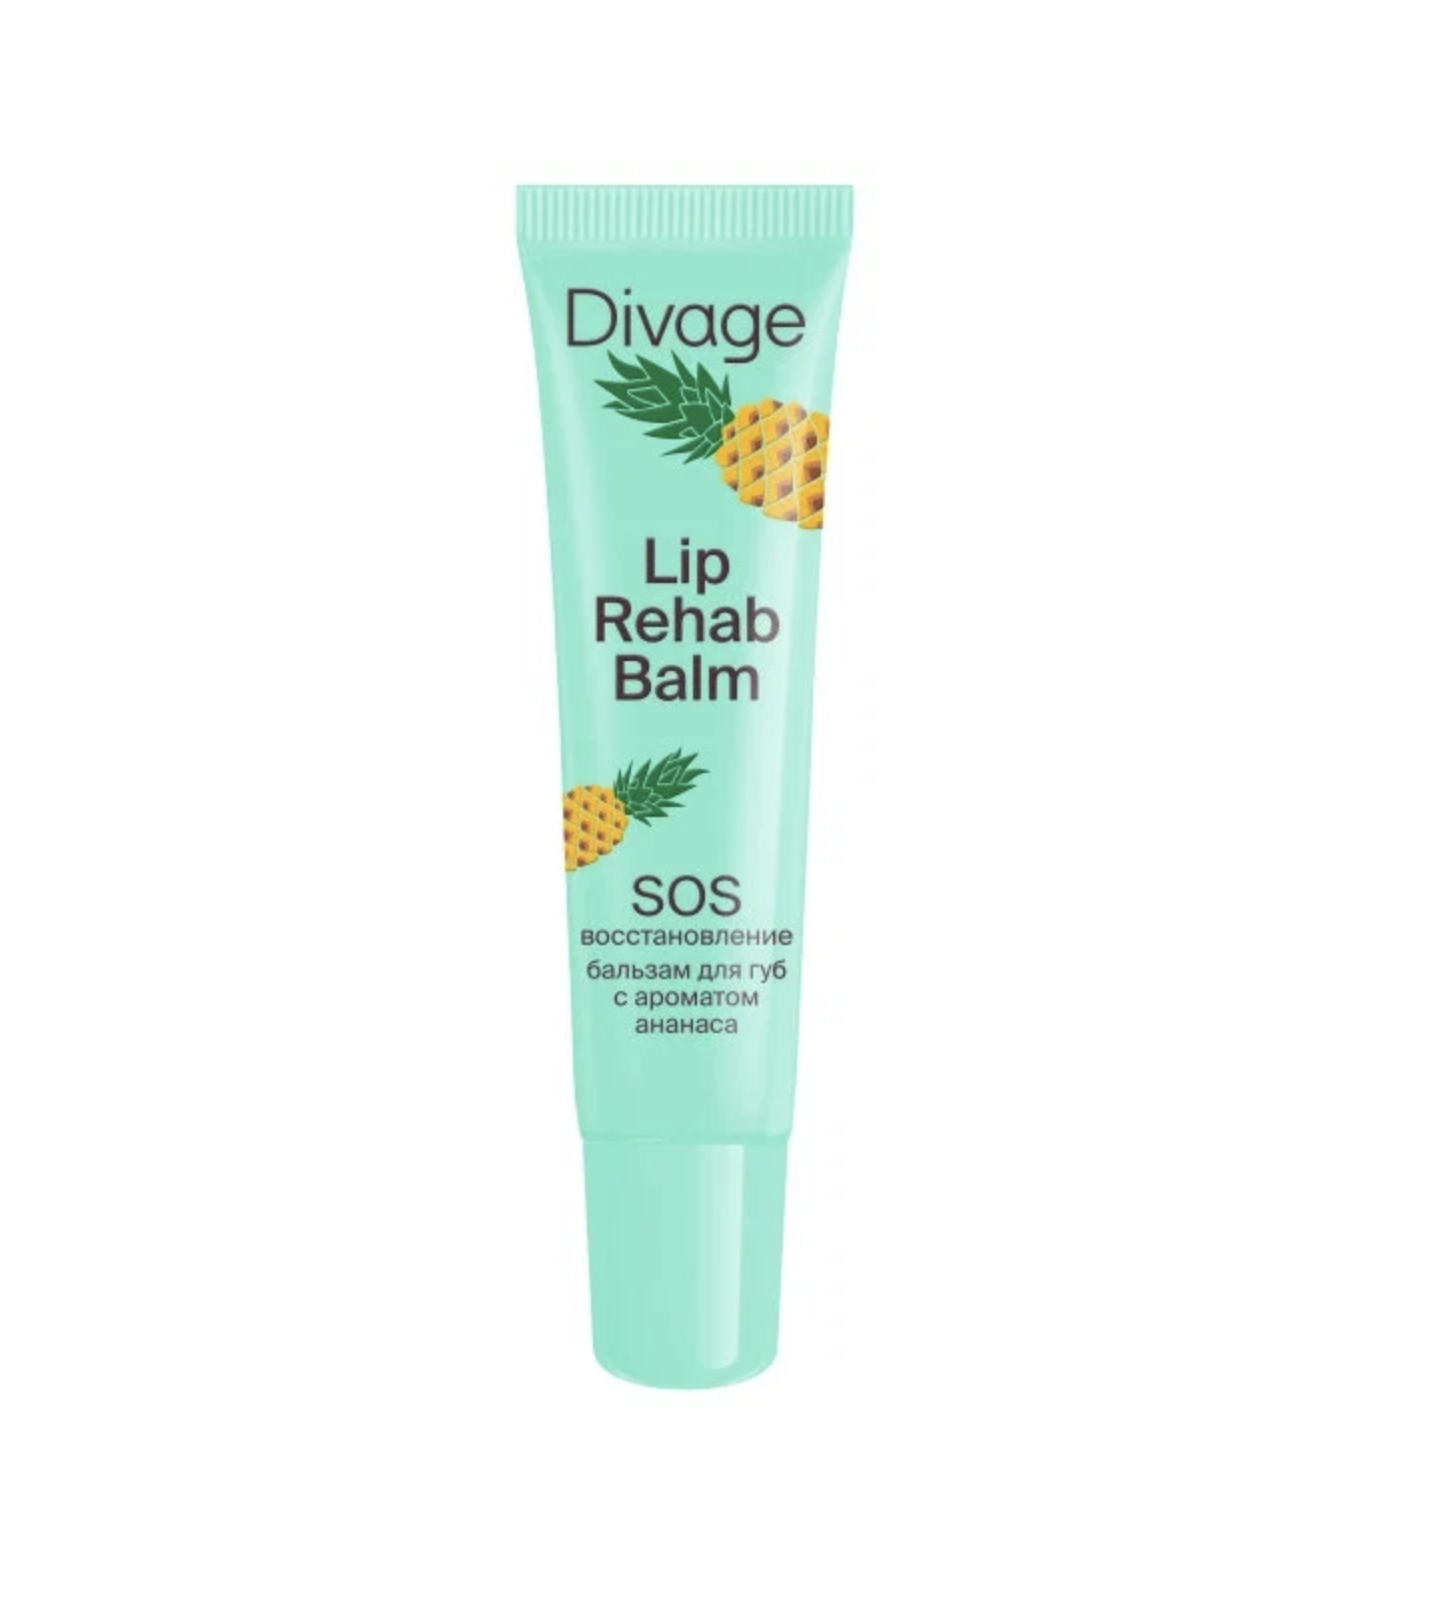   / Divage -    Lip Rehab Balm SOS     12 